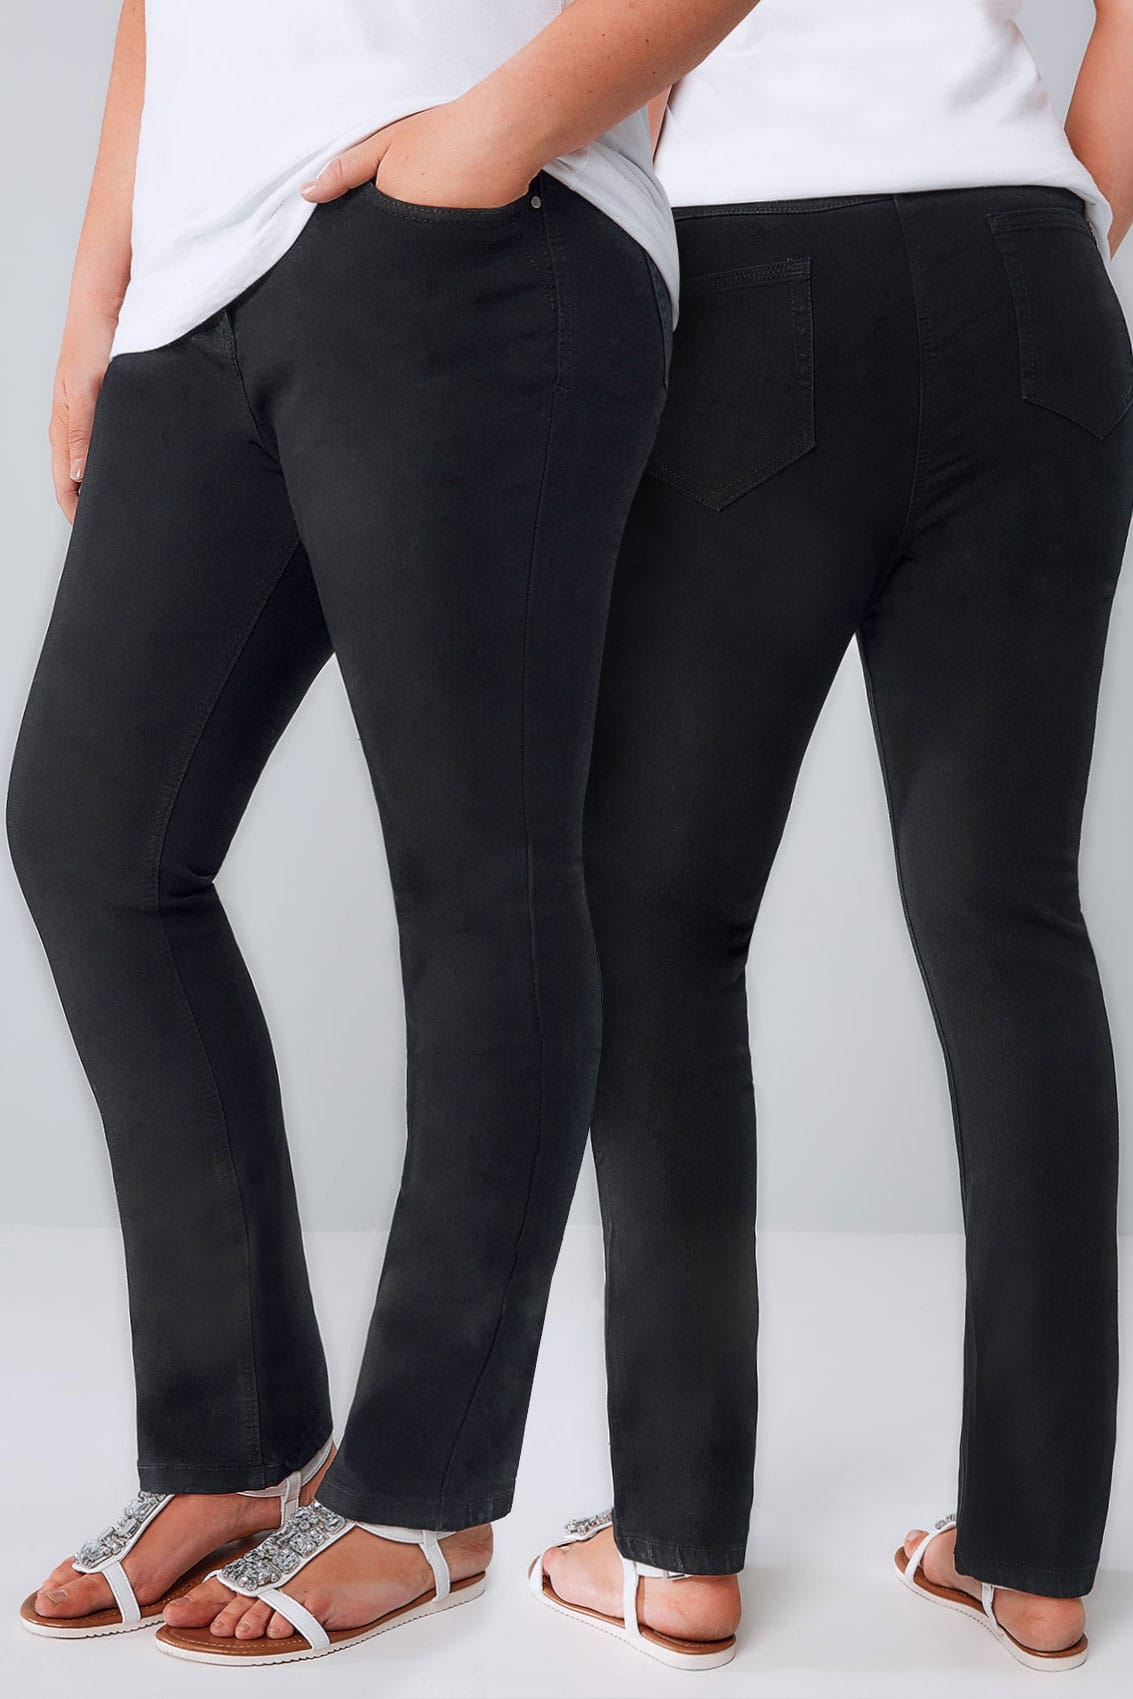 Black Straight Leg 5 Pocket Jeans, Plus size 16 to 361133 x 1699